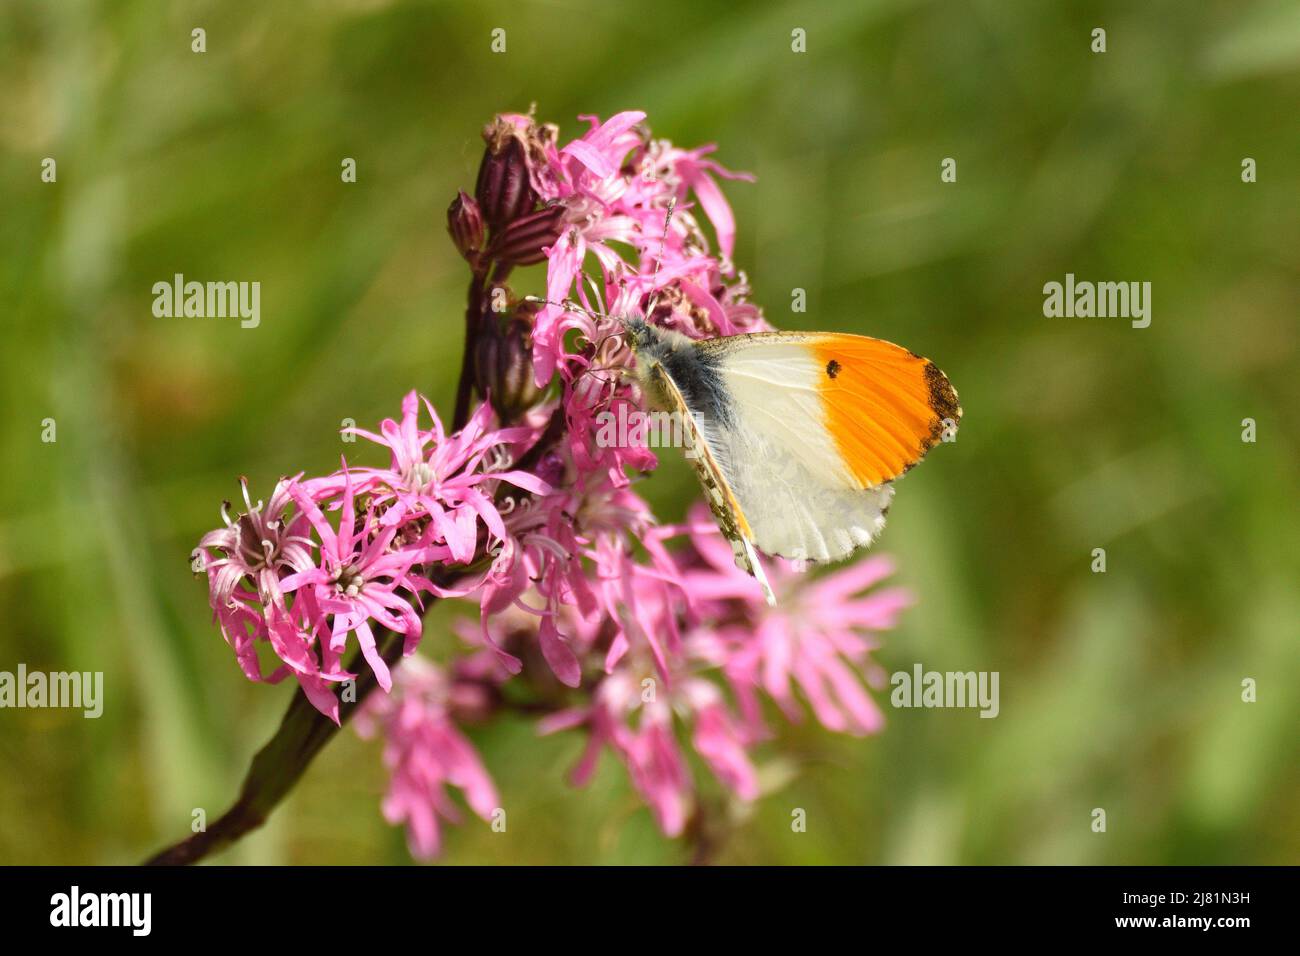 Mariposa de punta naranja en flores silvestres rosadas durante la primavera. Inglaterra, Reino Unido. Foto de stock